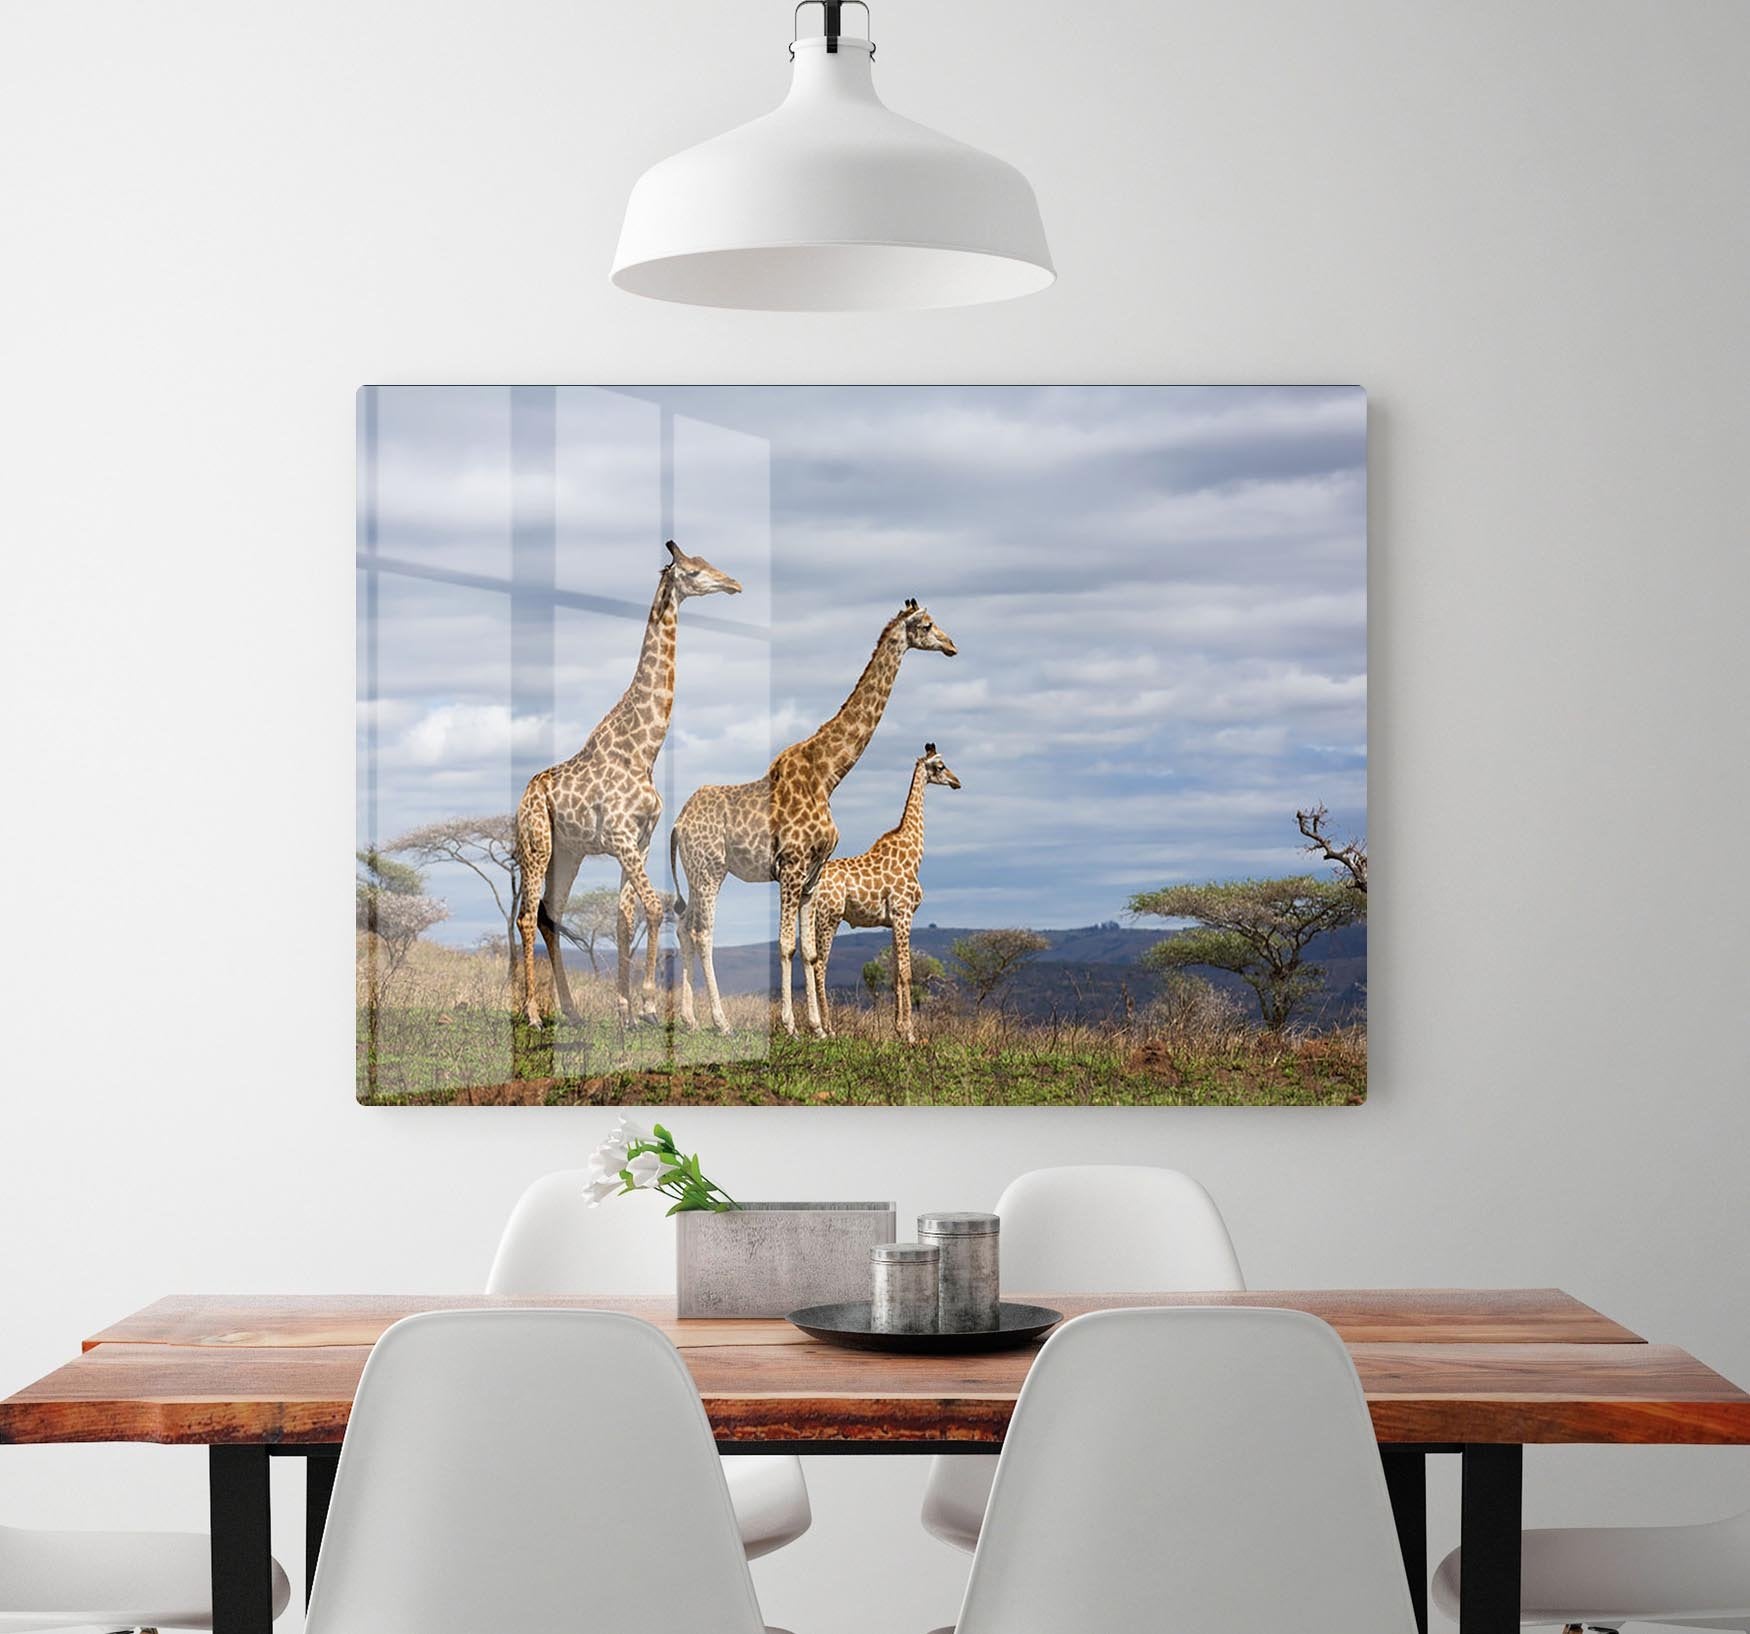 Giraffes in south africa game reserve HD Metal Print - Canvas Art Rocks - 2